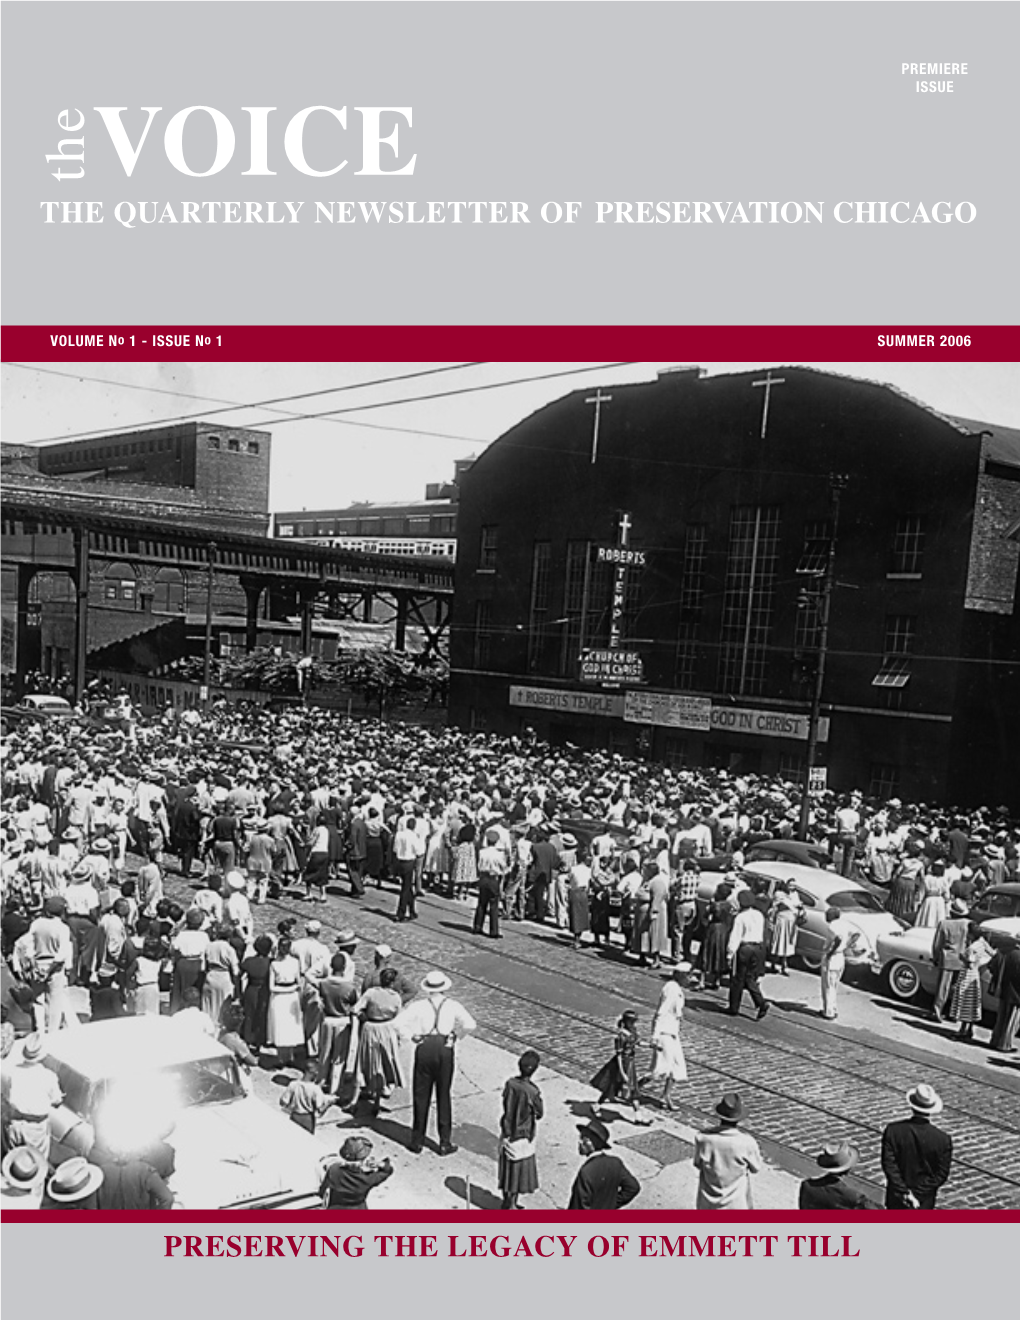 The Quarterly Newsletter of Preservation Chicago